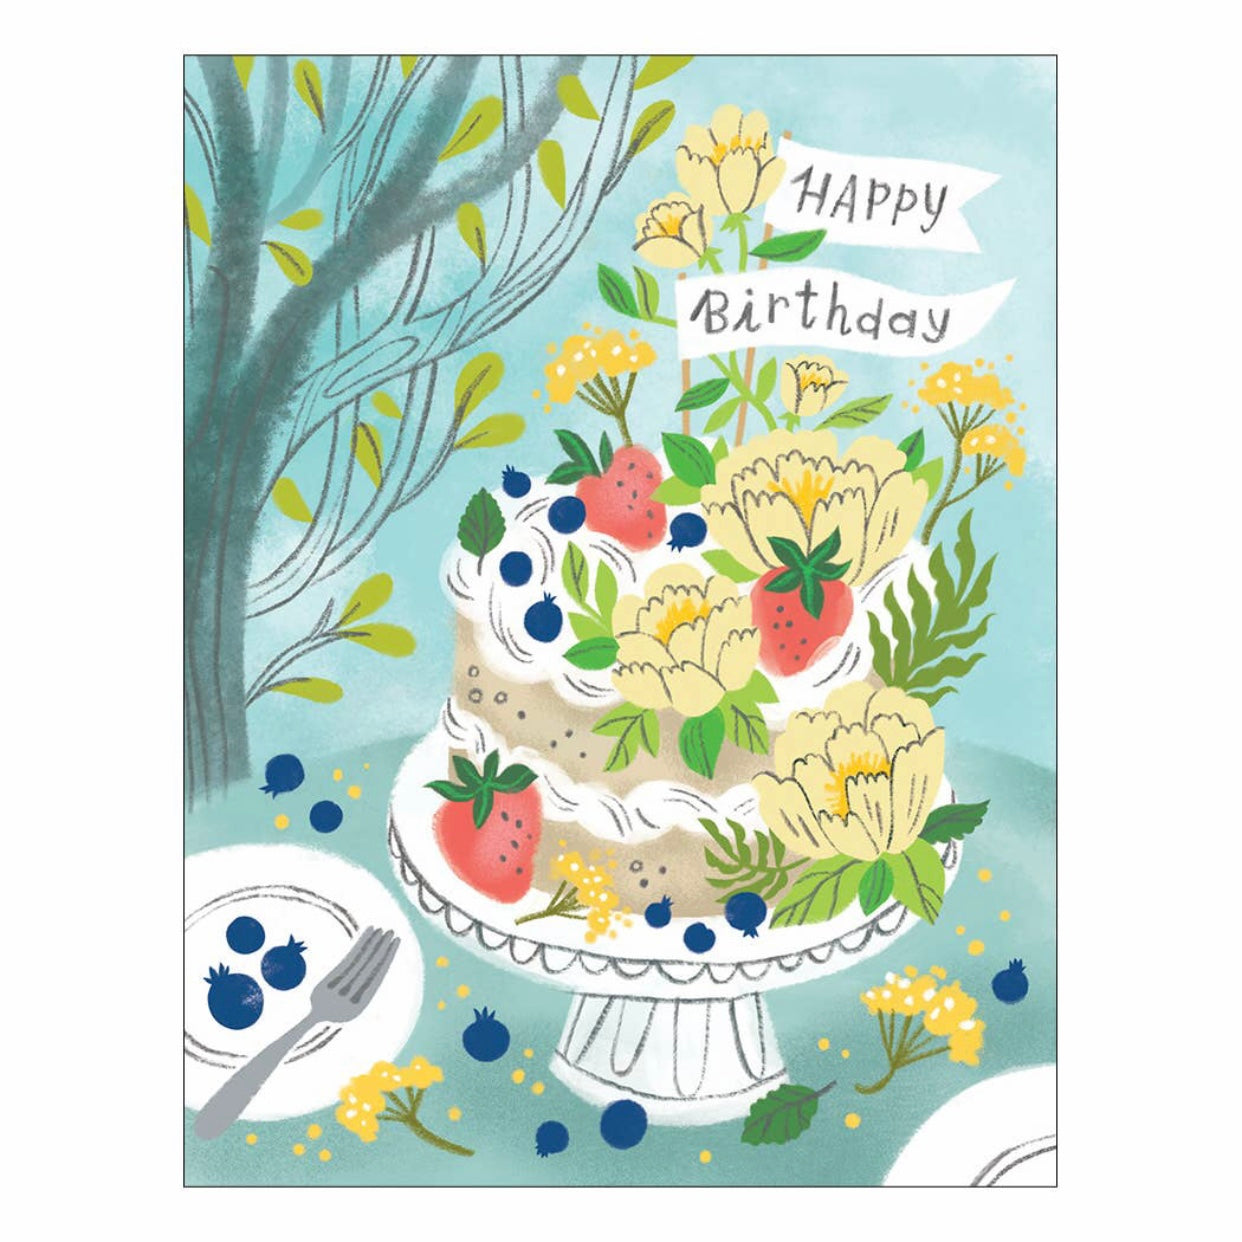 Happy Birthday Blank Greeting Card